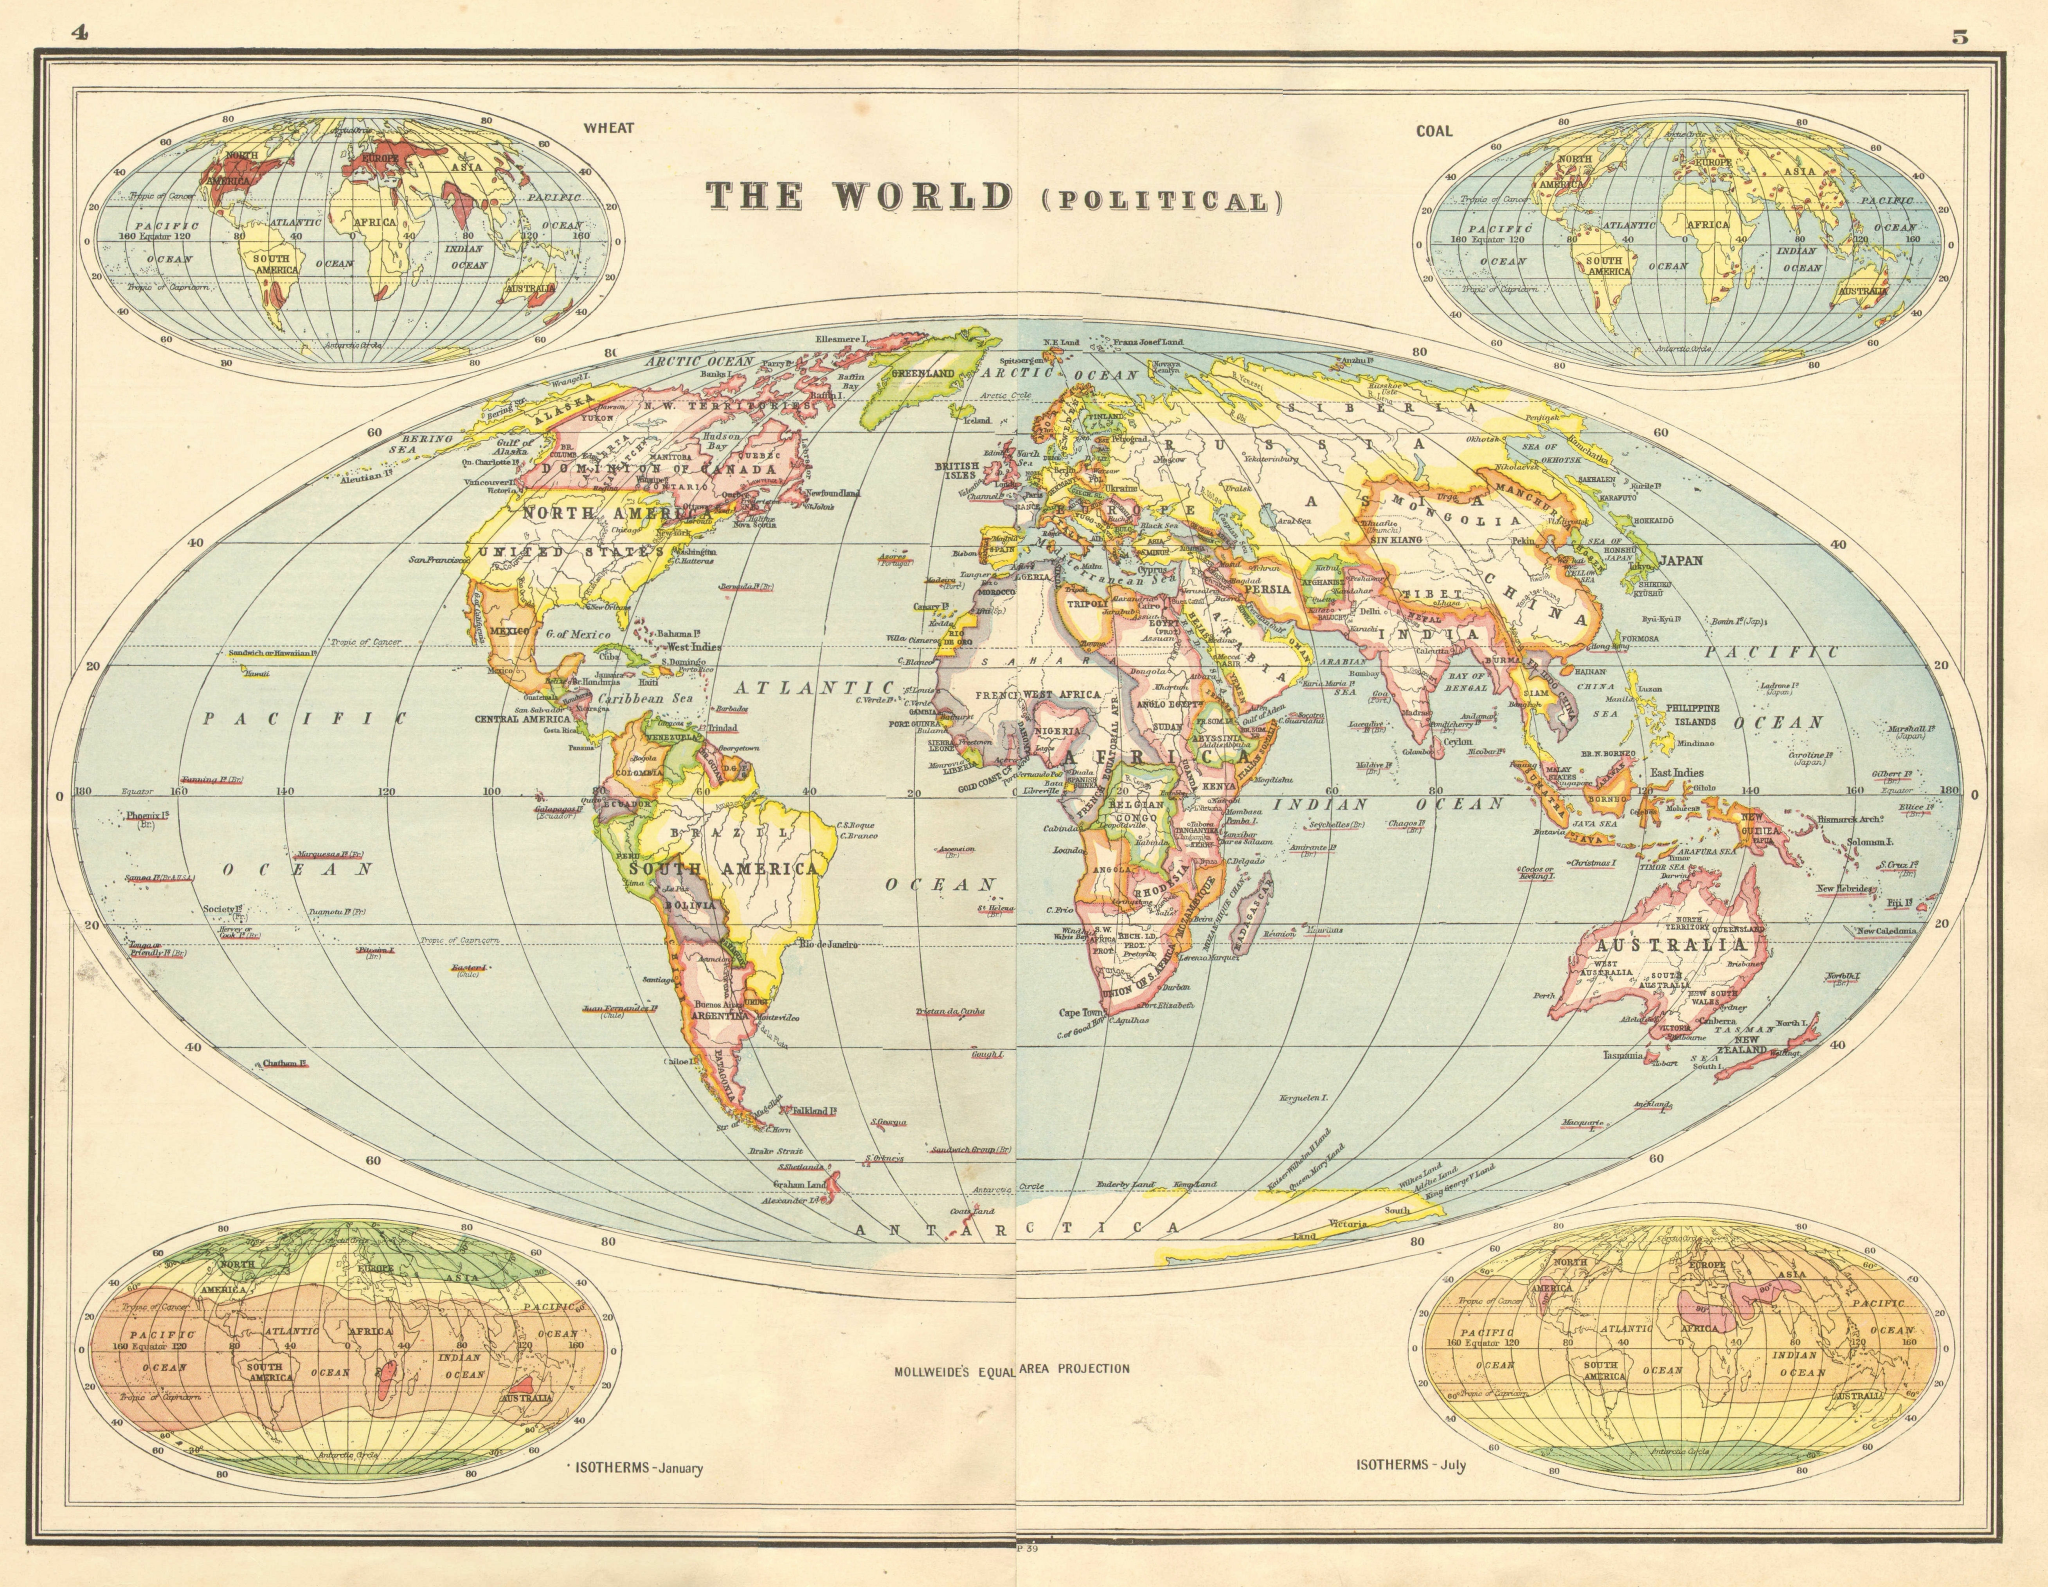 WORLD POLITICAL. Hejas Asir British Empire Chosen Rio de Oro Siam 1920 old map